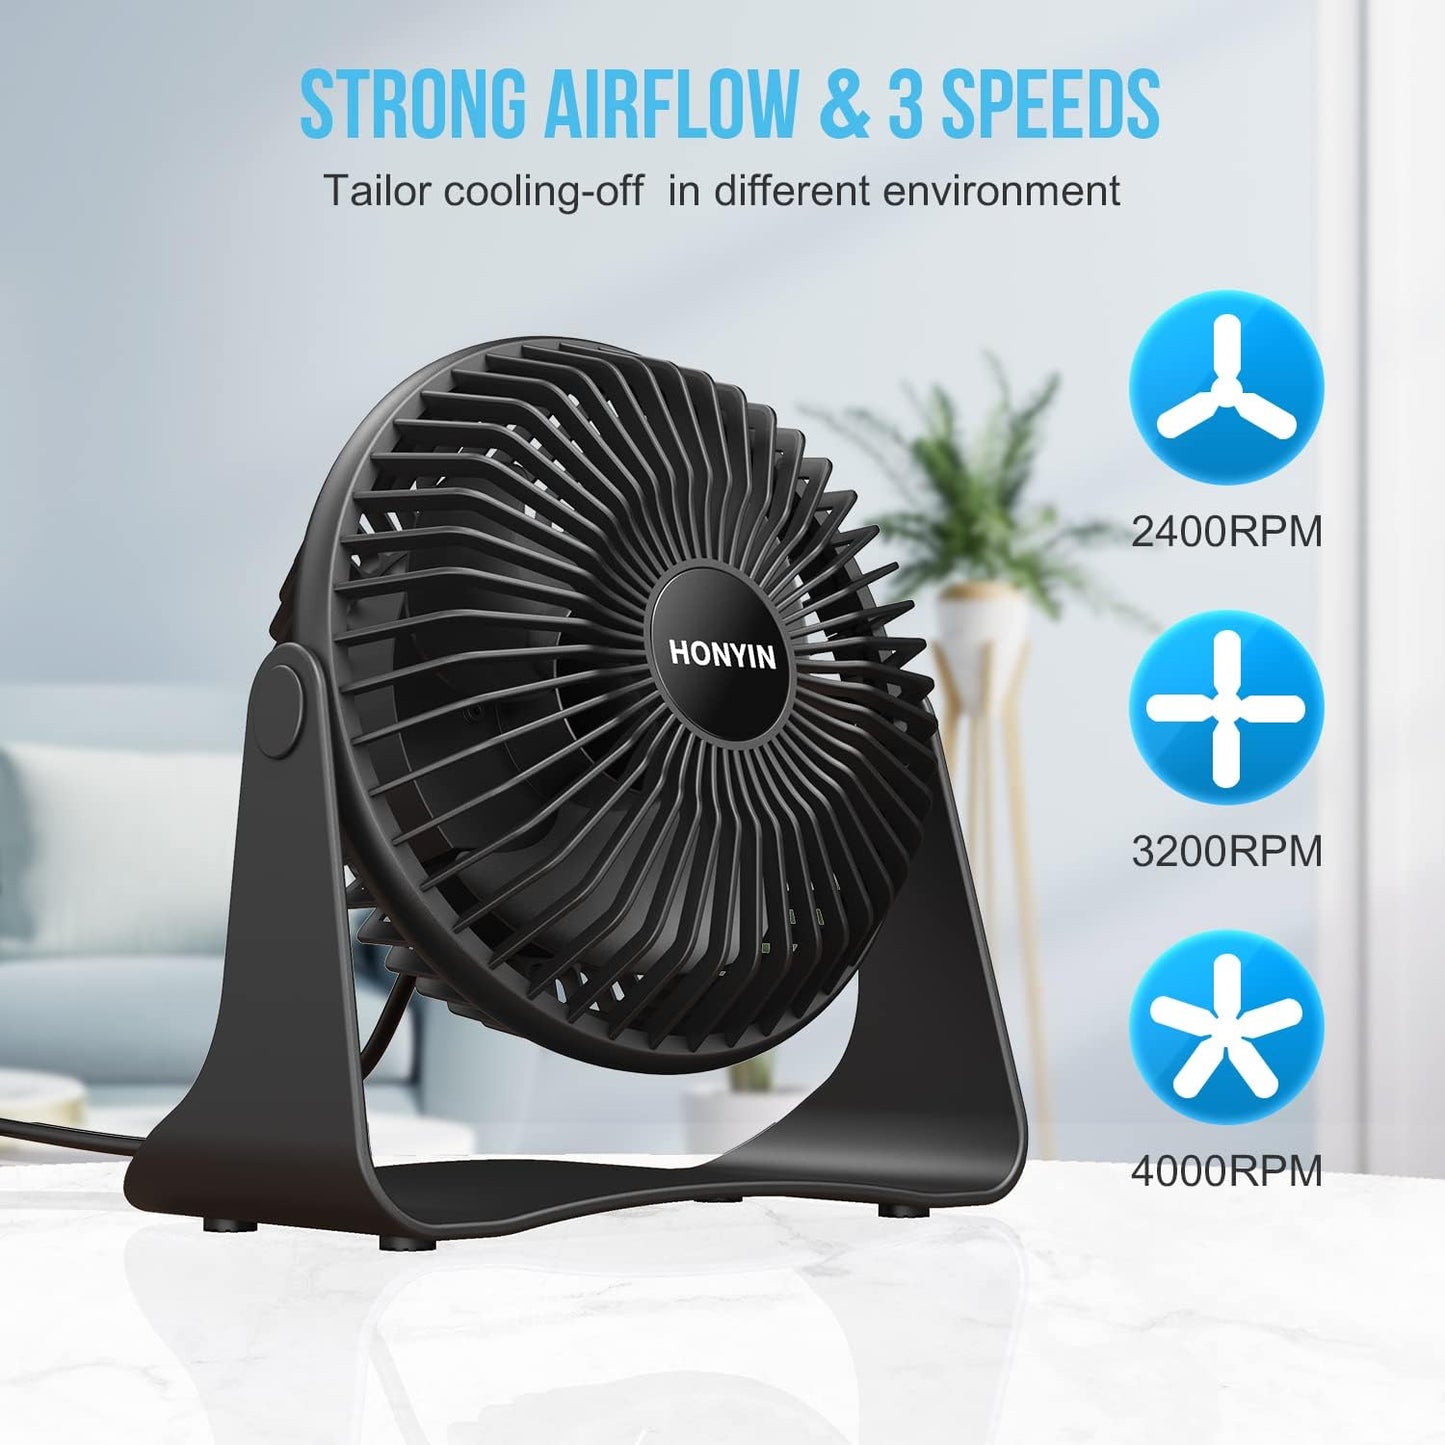 HONYIN 5'' Small USB Desk Fan, 3 Speeds Desktop Table Cooling Fan, 360° Rotatable, Strong Wind